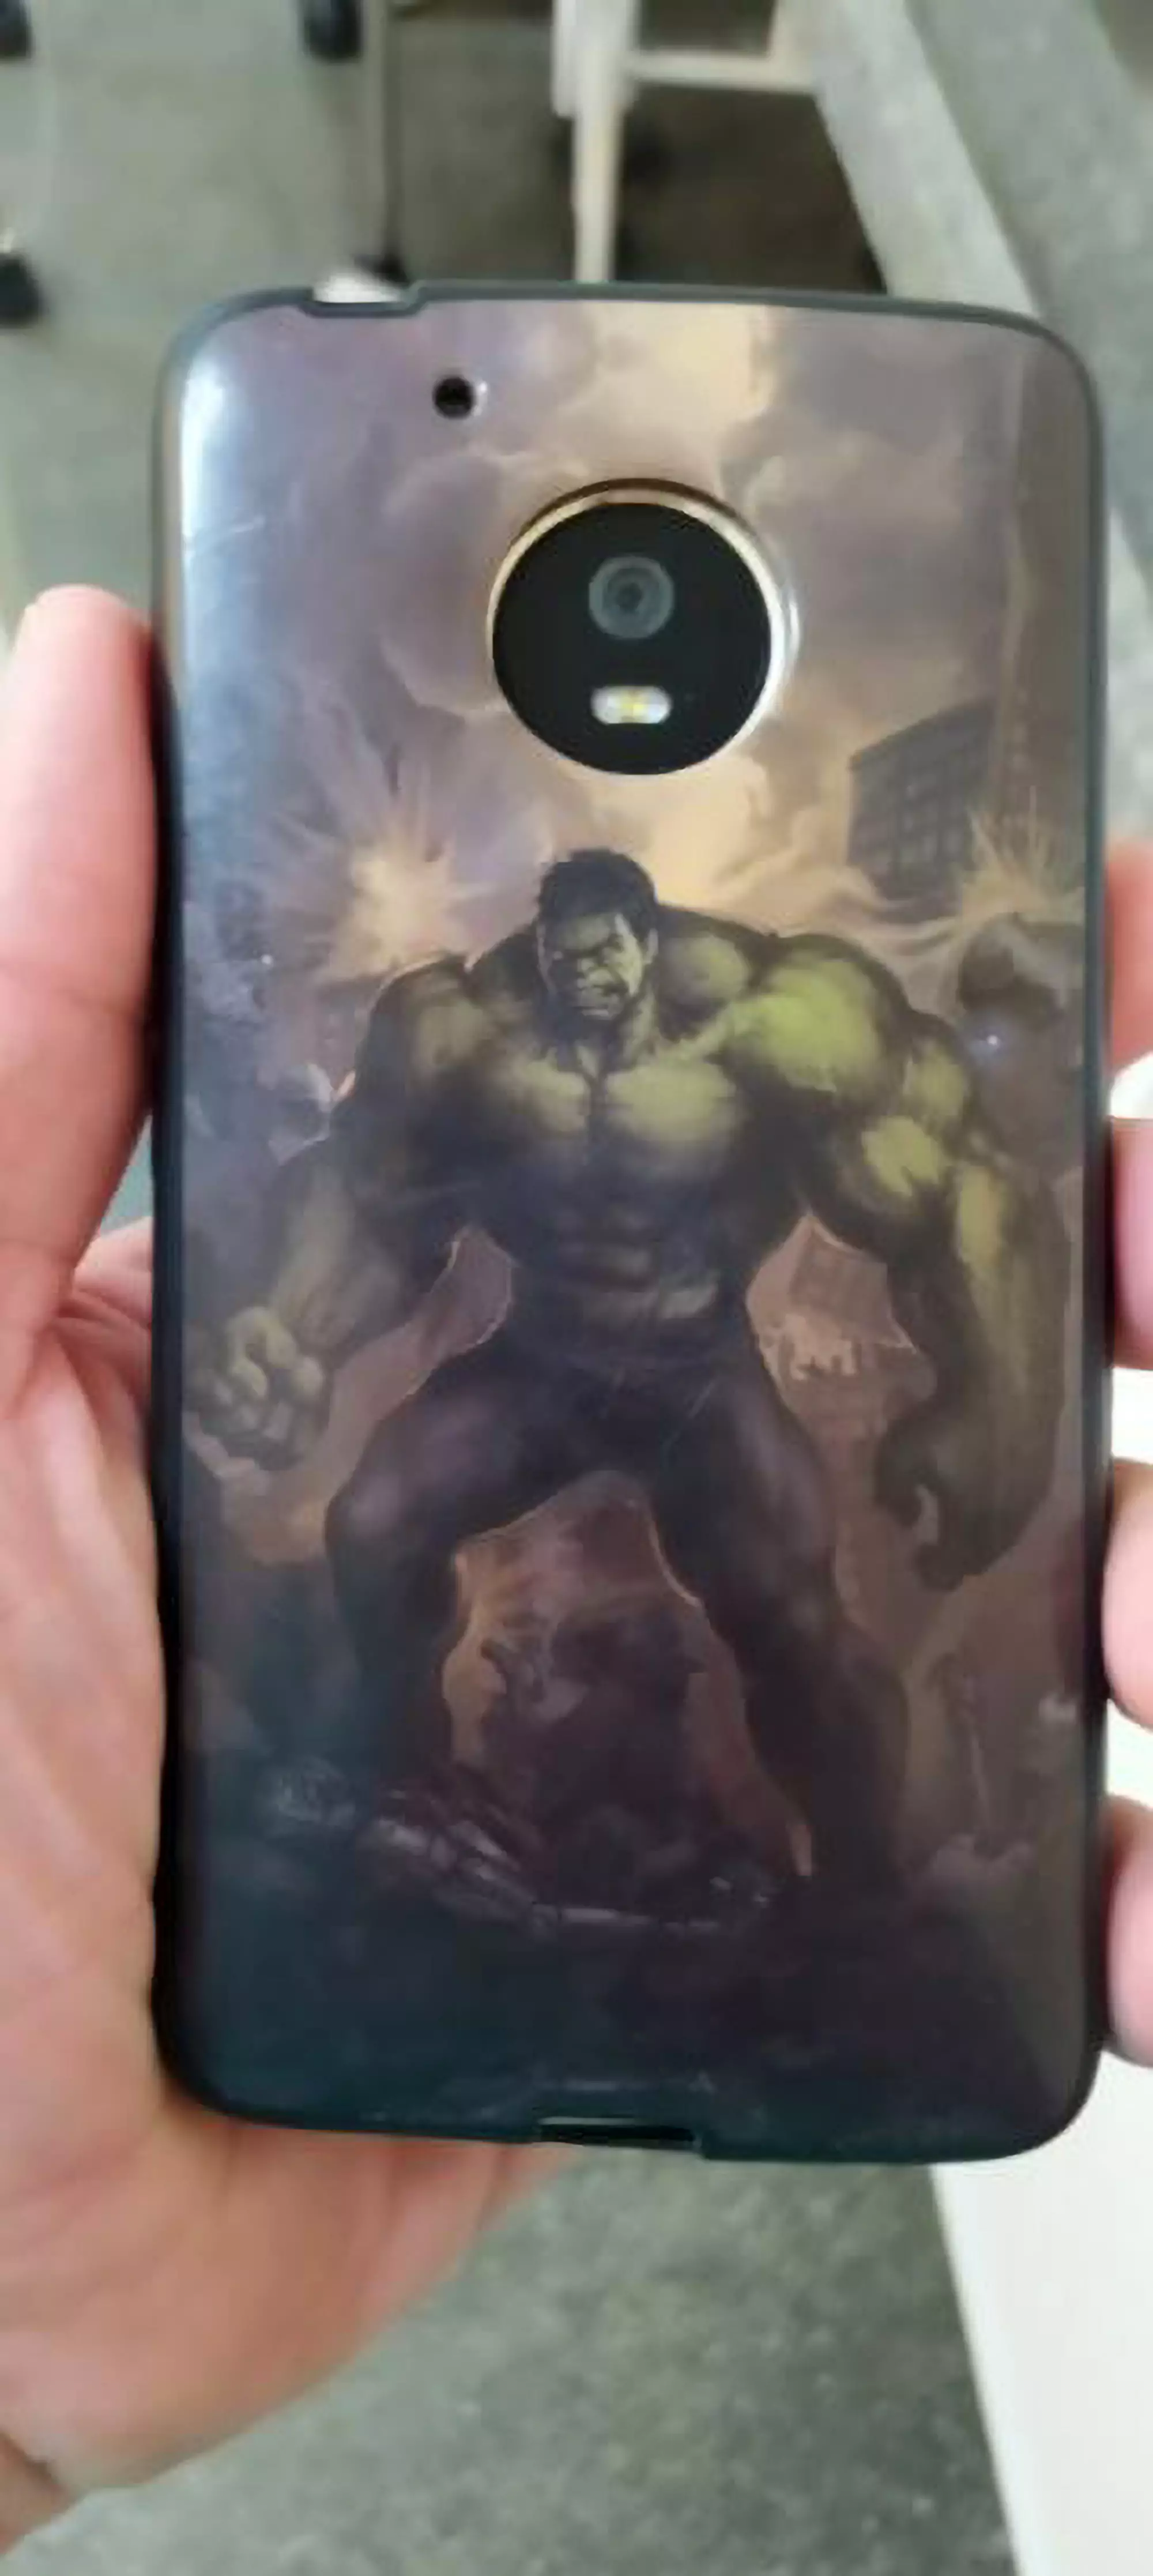 The 'life saving' Hulk-themed phone case.